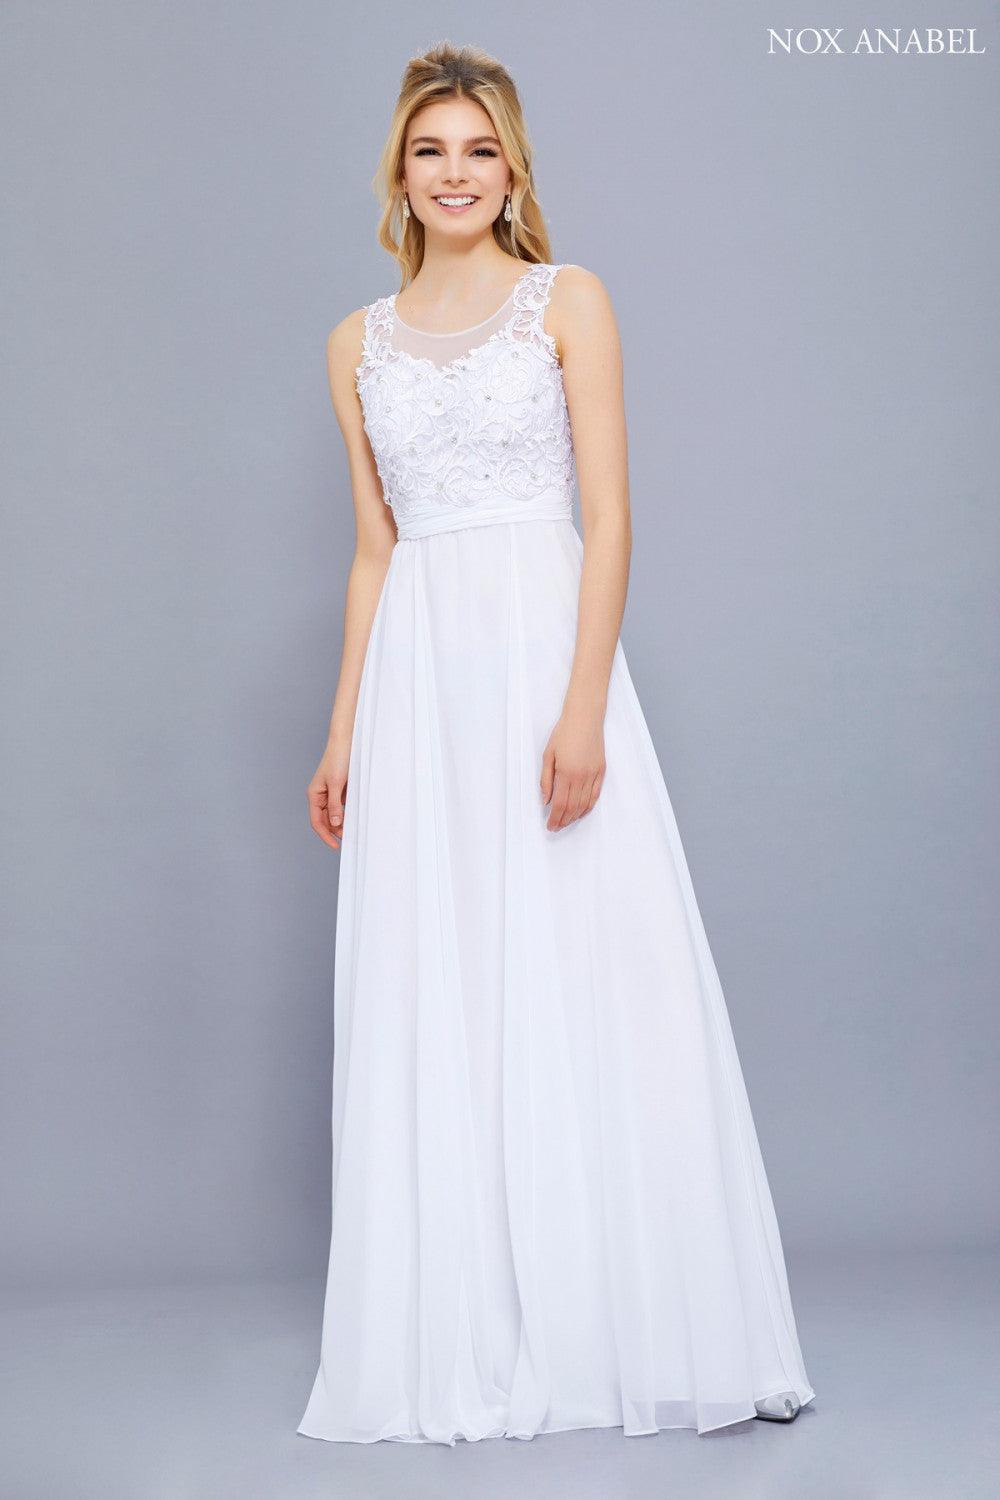 Long Sleeveless Formal Wedding Dress - The Dress Outlet Nox Anabel